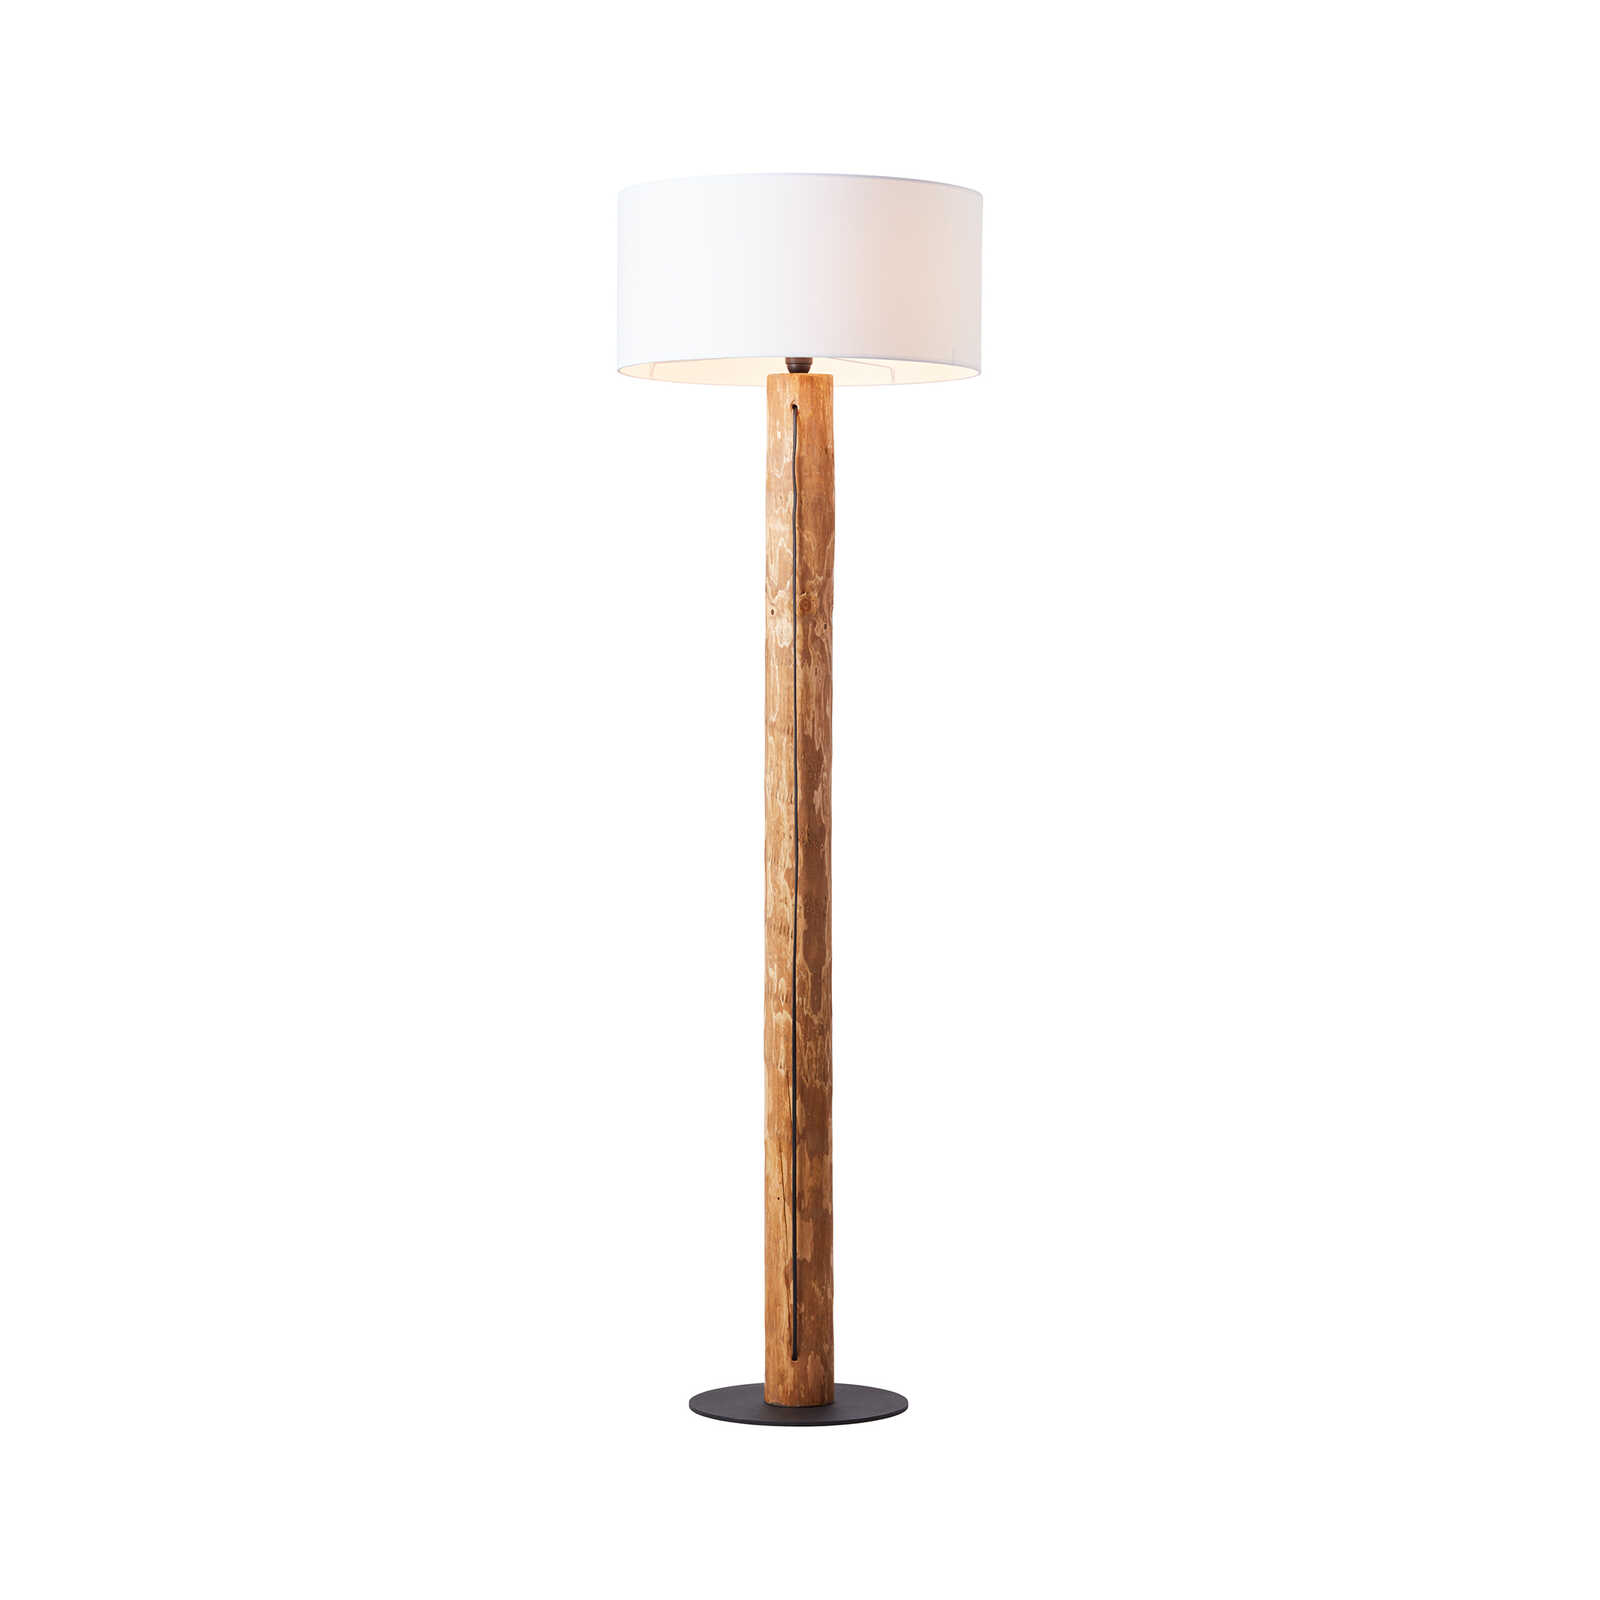 Floor lamp made of textile - Joshua 3 - Brown
